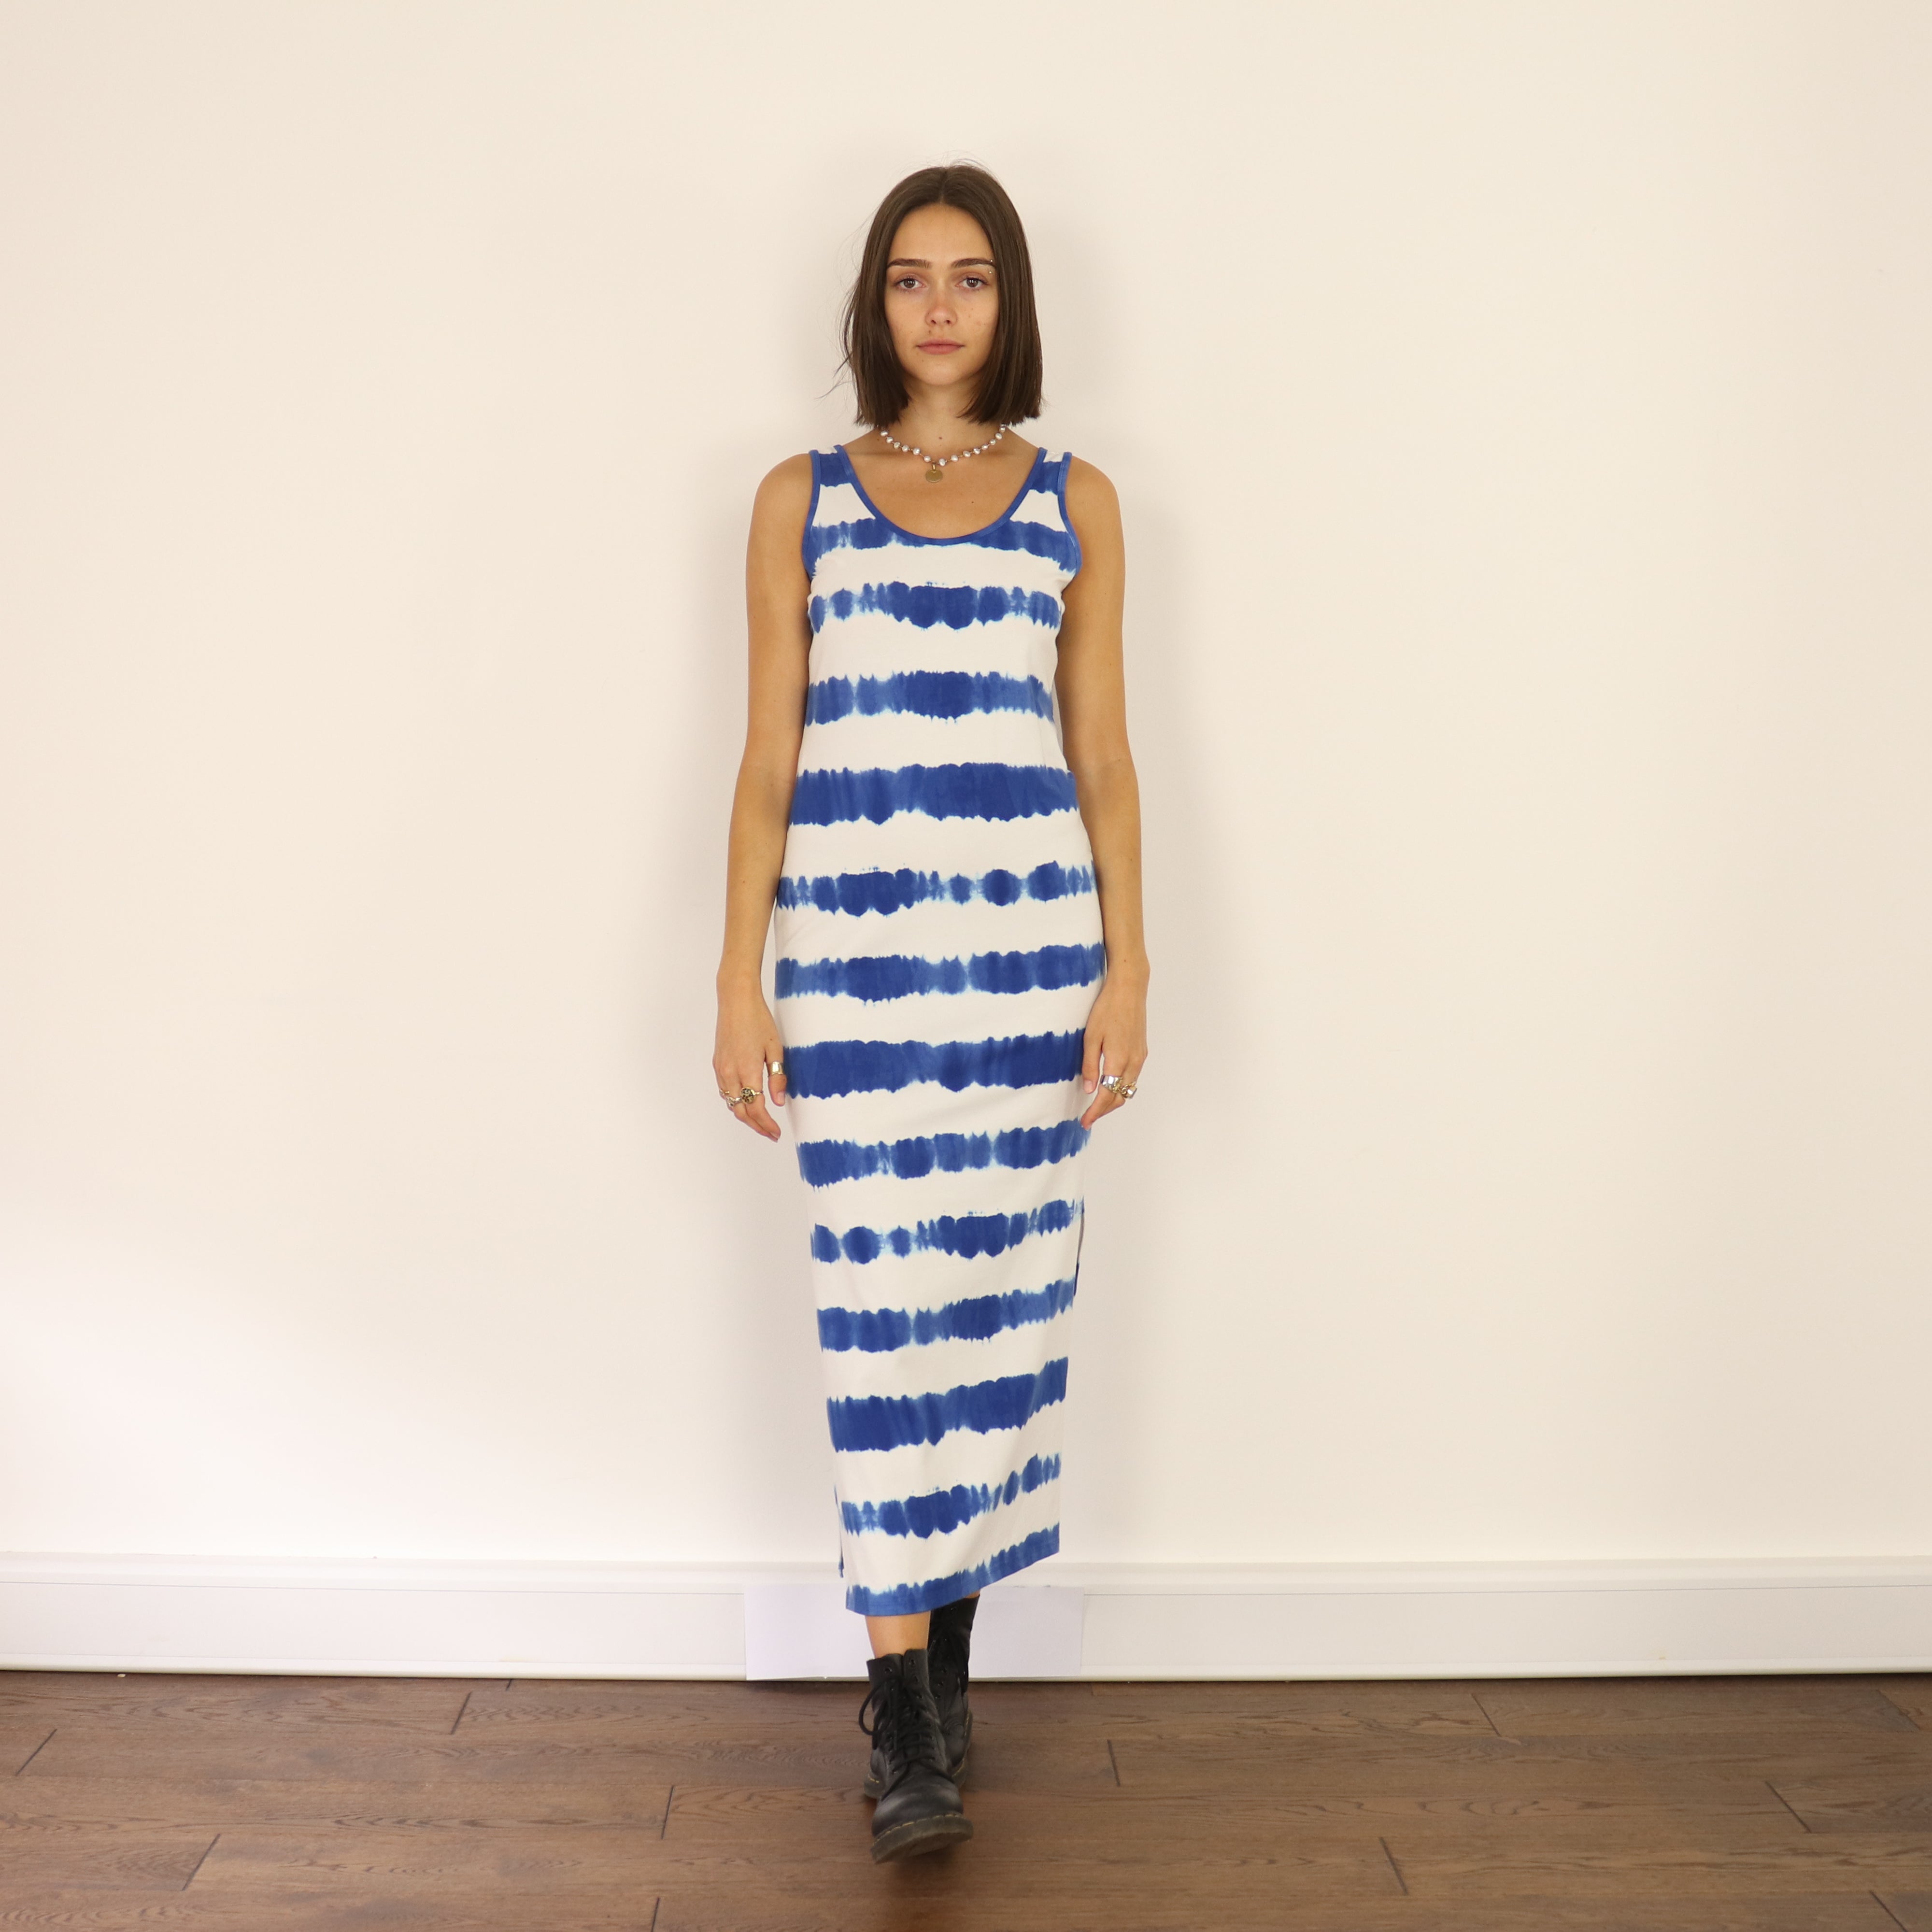 Dress, UK Size 8